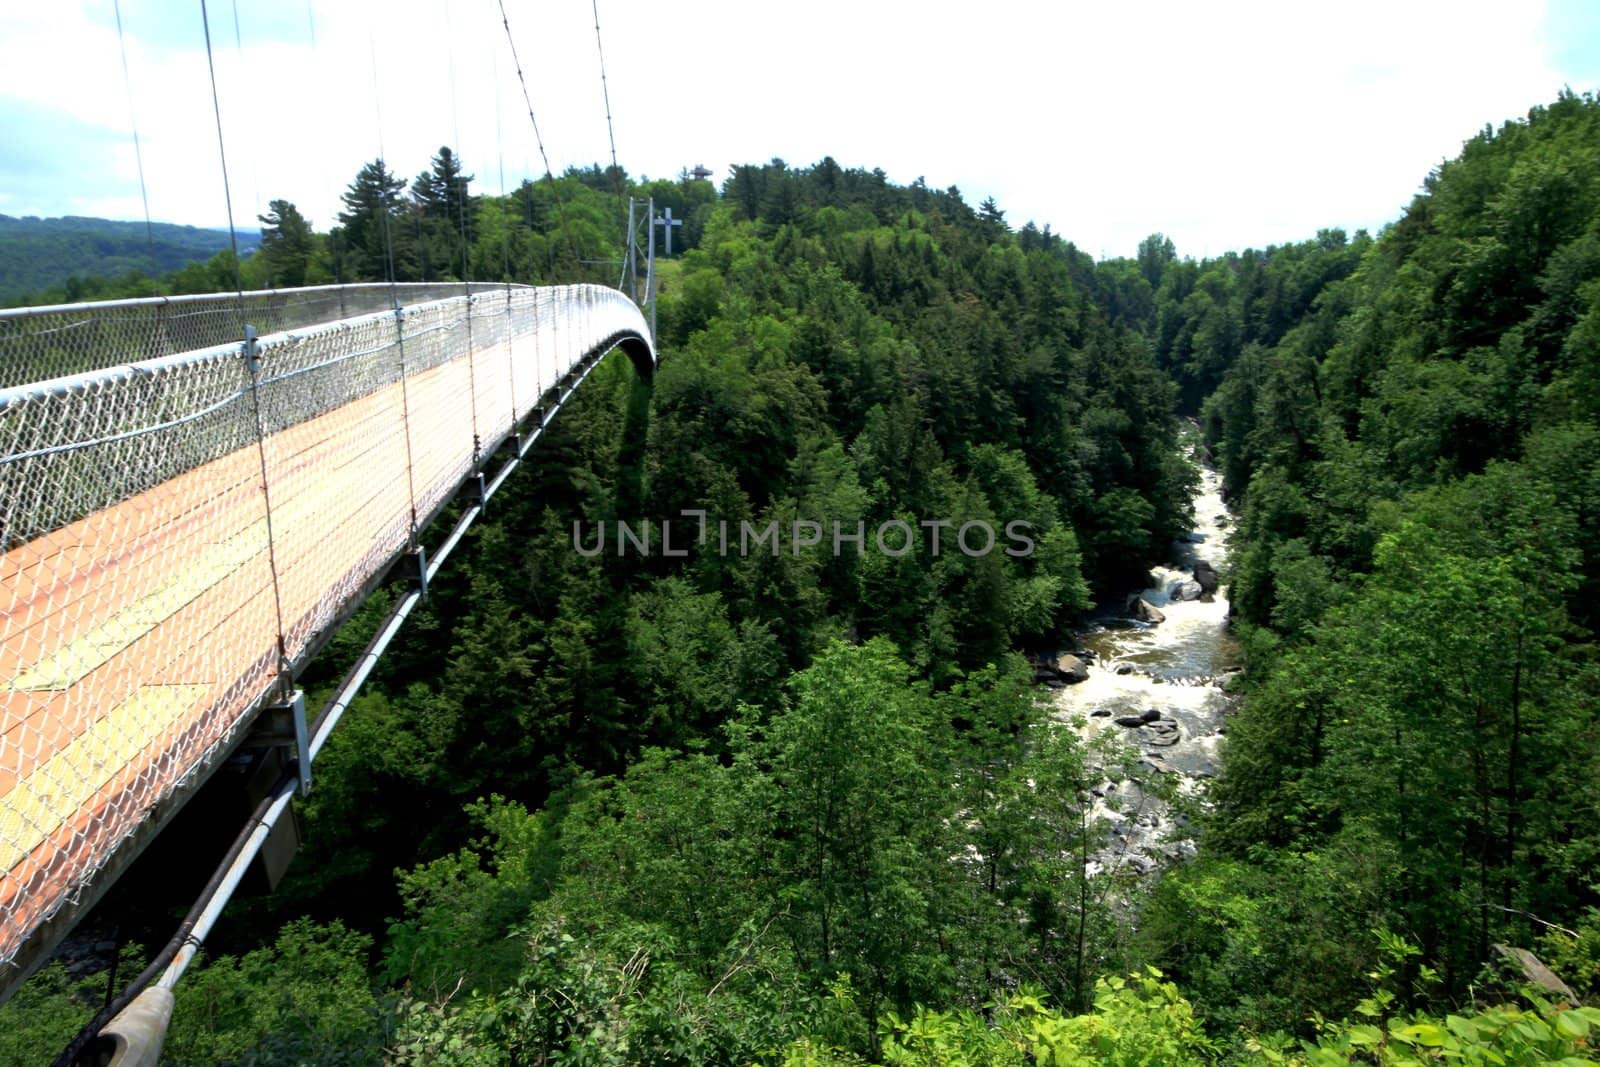 Longest suspended pedestrian bridge over  a river